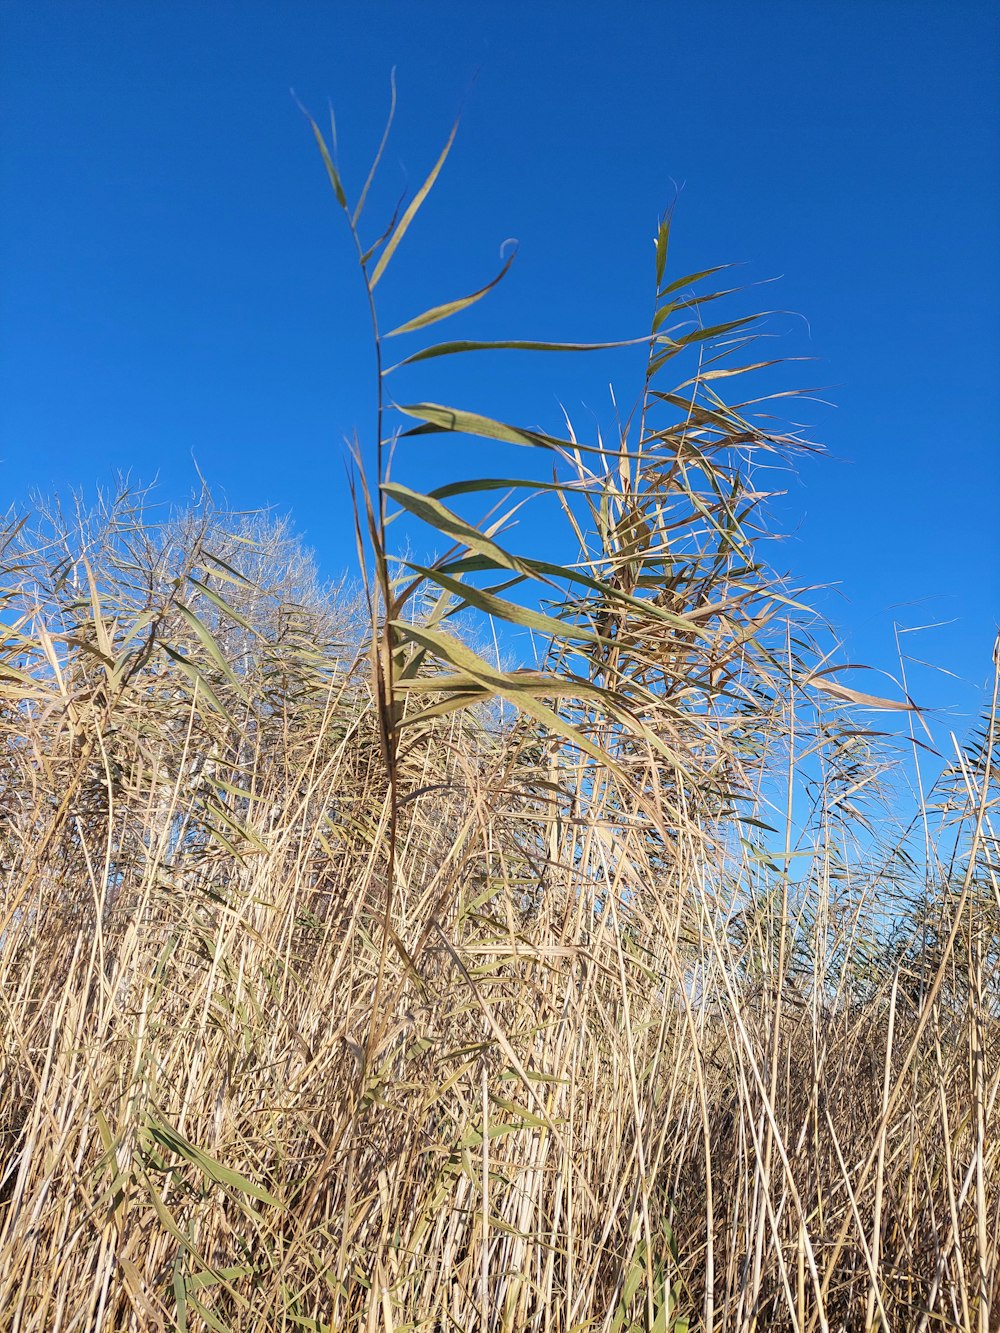 a field of tall dry grass under a blue sky